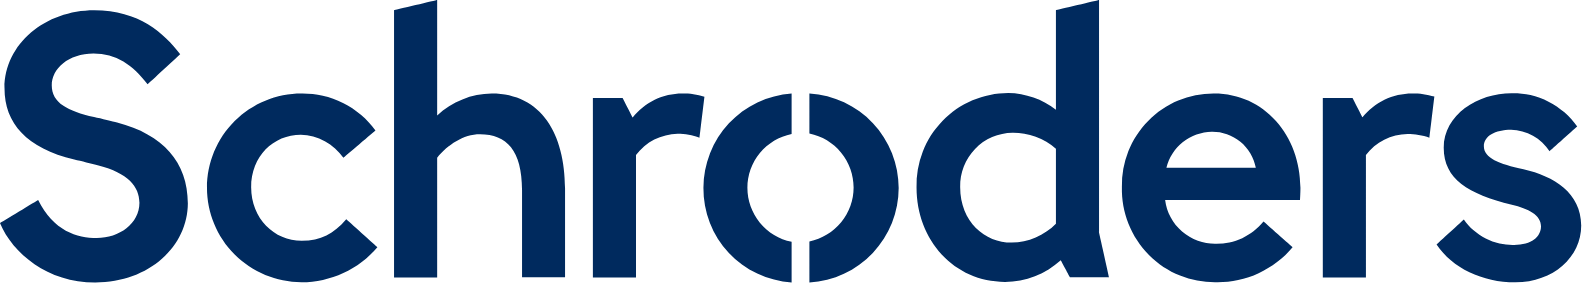 Schroders logo large (transparent PNG)